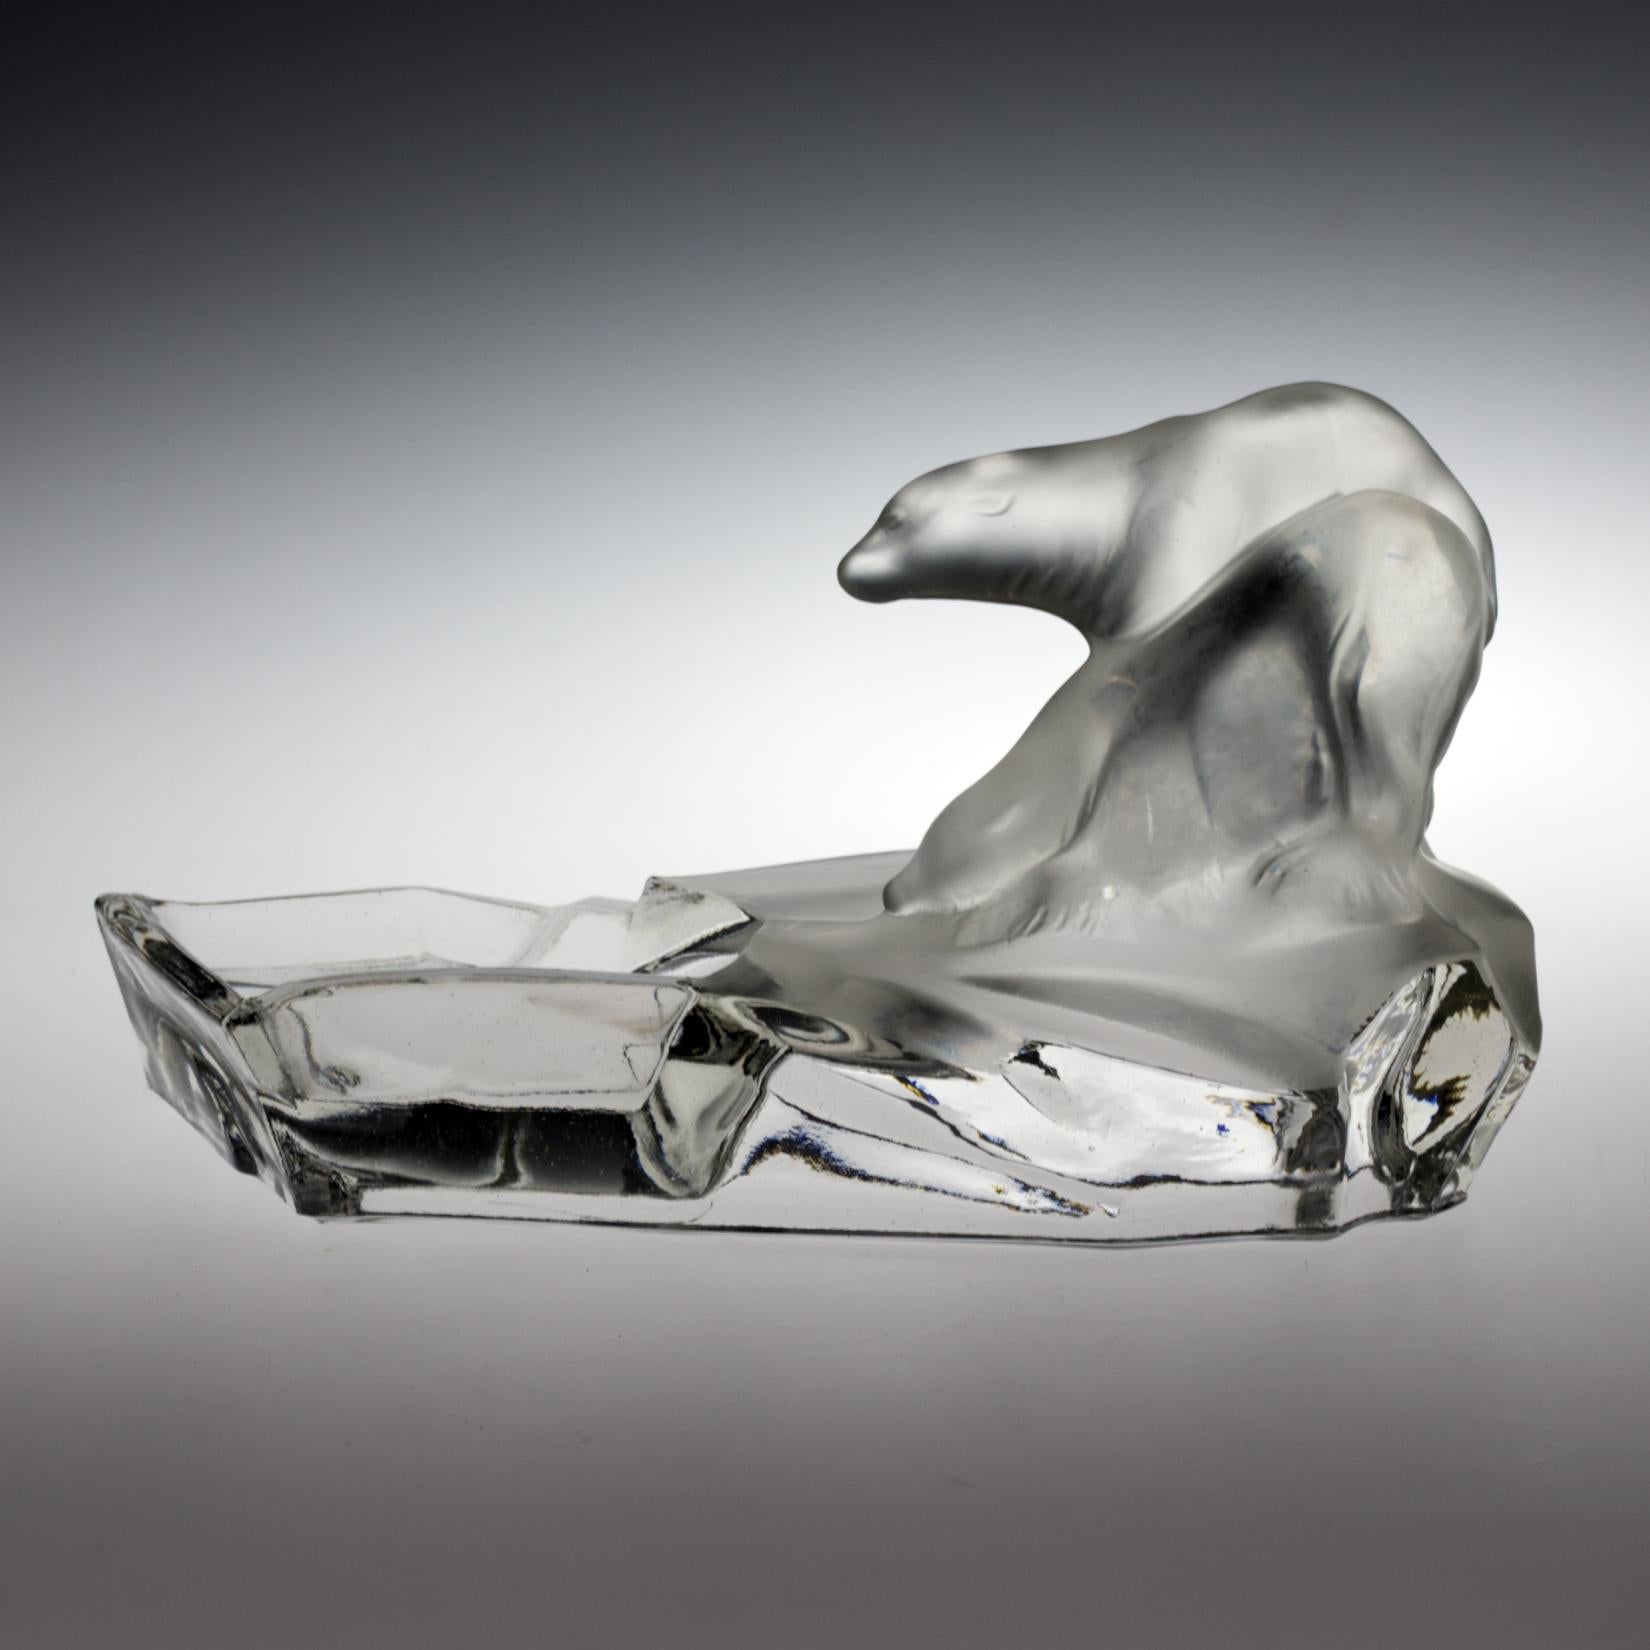 Pressed Bohemian Feigl and Morawetz Libochovice Art Deco Glass Polar Bears Ashtray 1930s For Sale